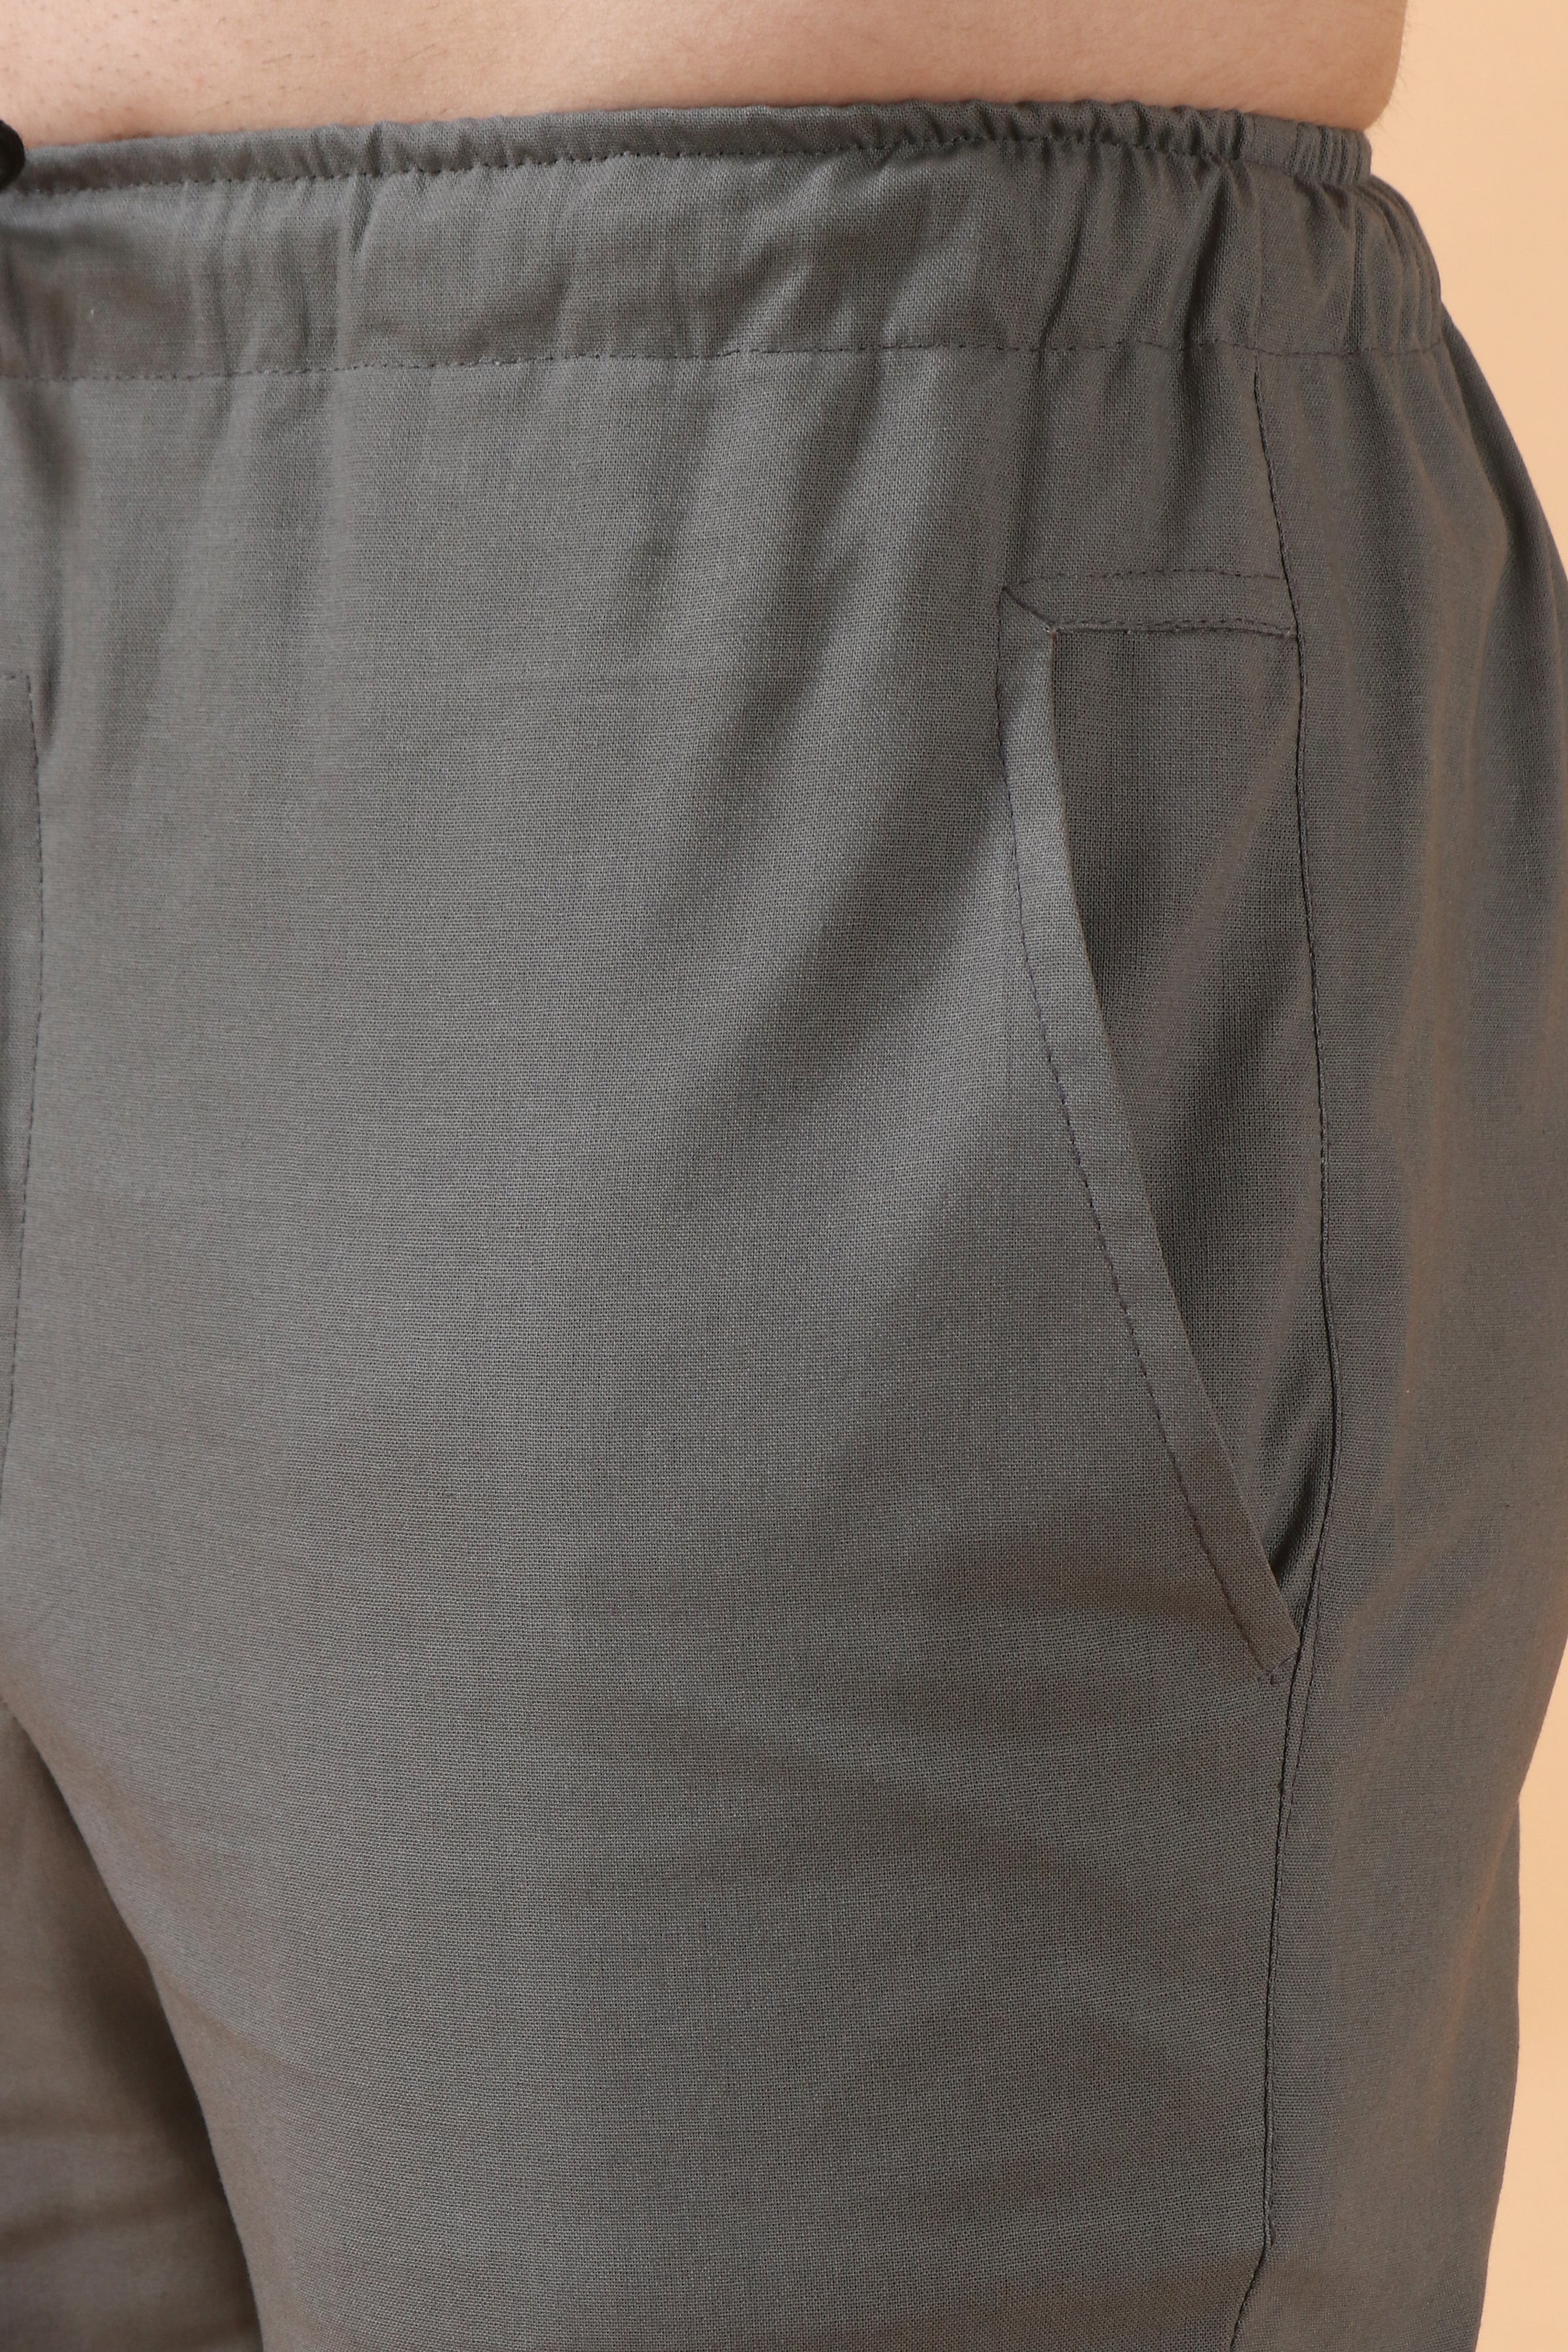 drawstring pants: Women's Plus Size Clothing | Dillard's